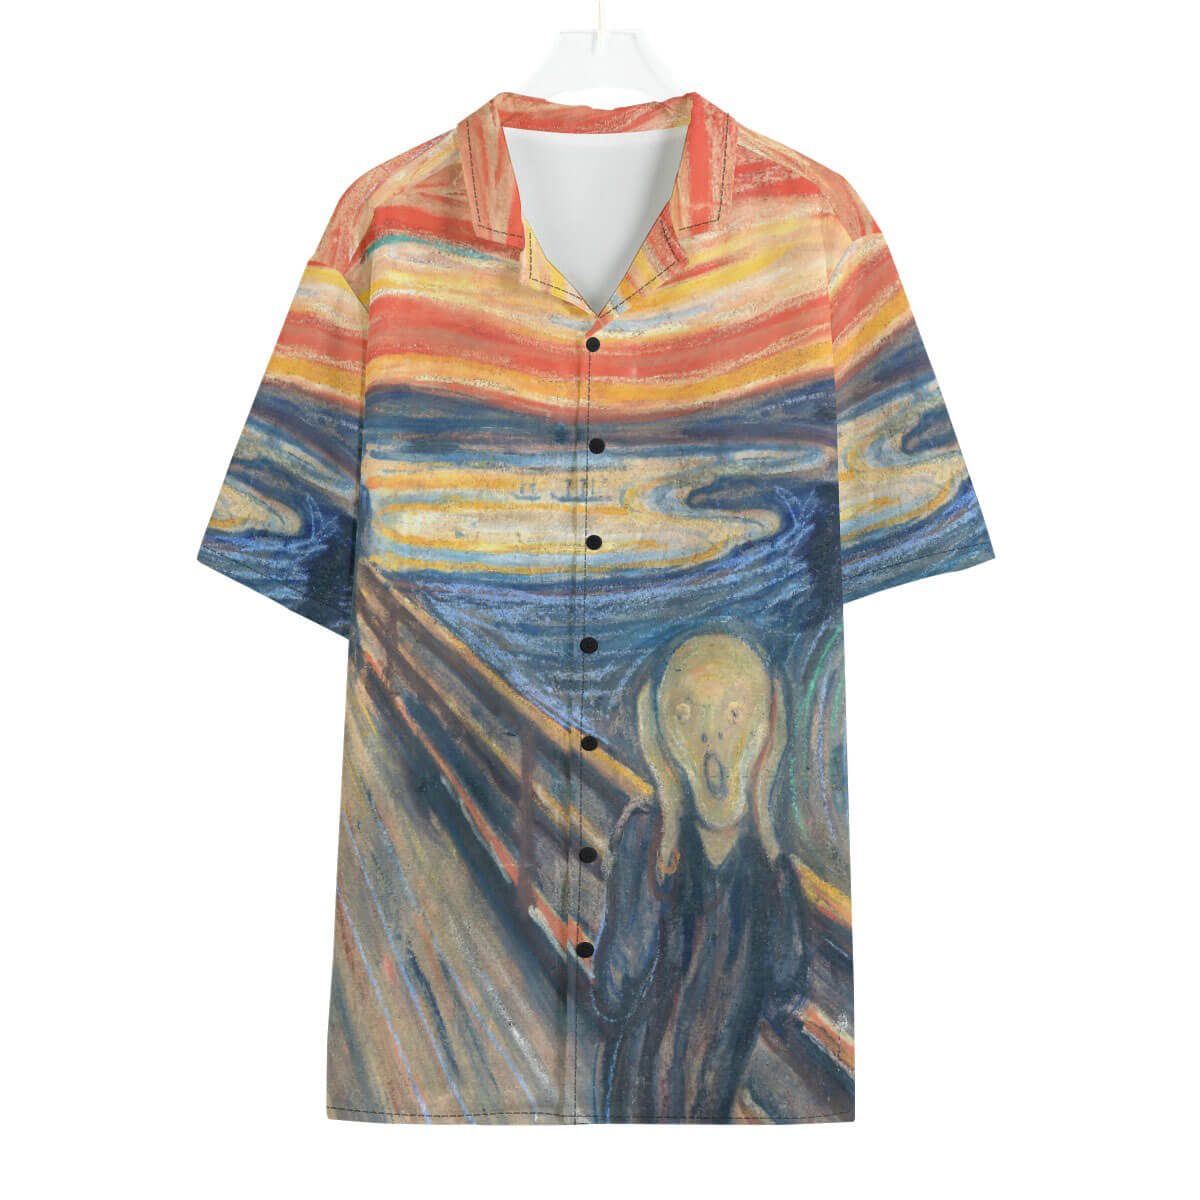 A vibrant Hawaiian shirt featuring Edvard Munch's The Scream